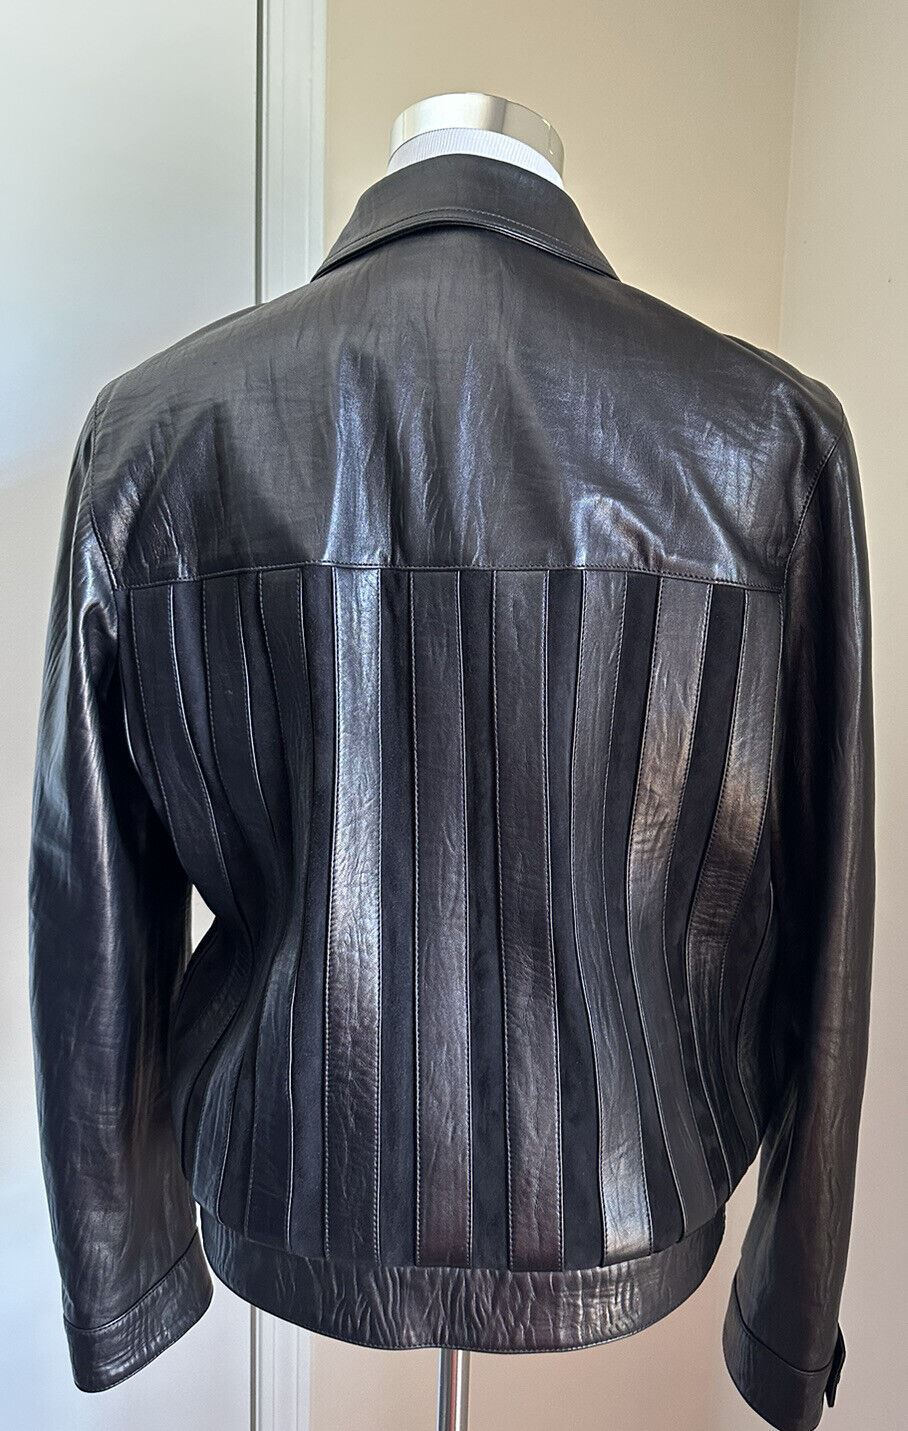 New $5490 Saint Laurent Men’s Leather/Suede Jacket Coat Black 44 US/54 Eu Italy